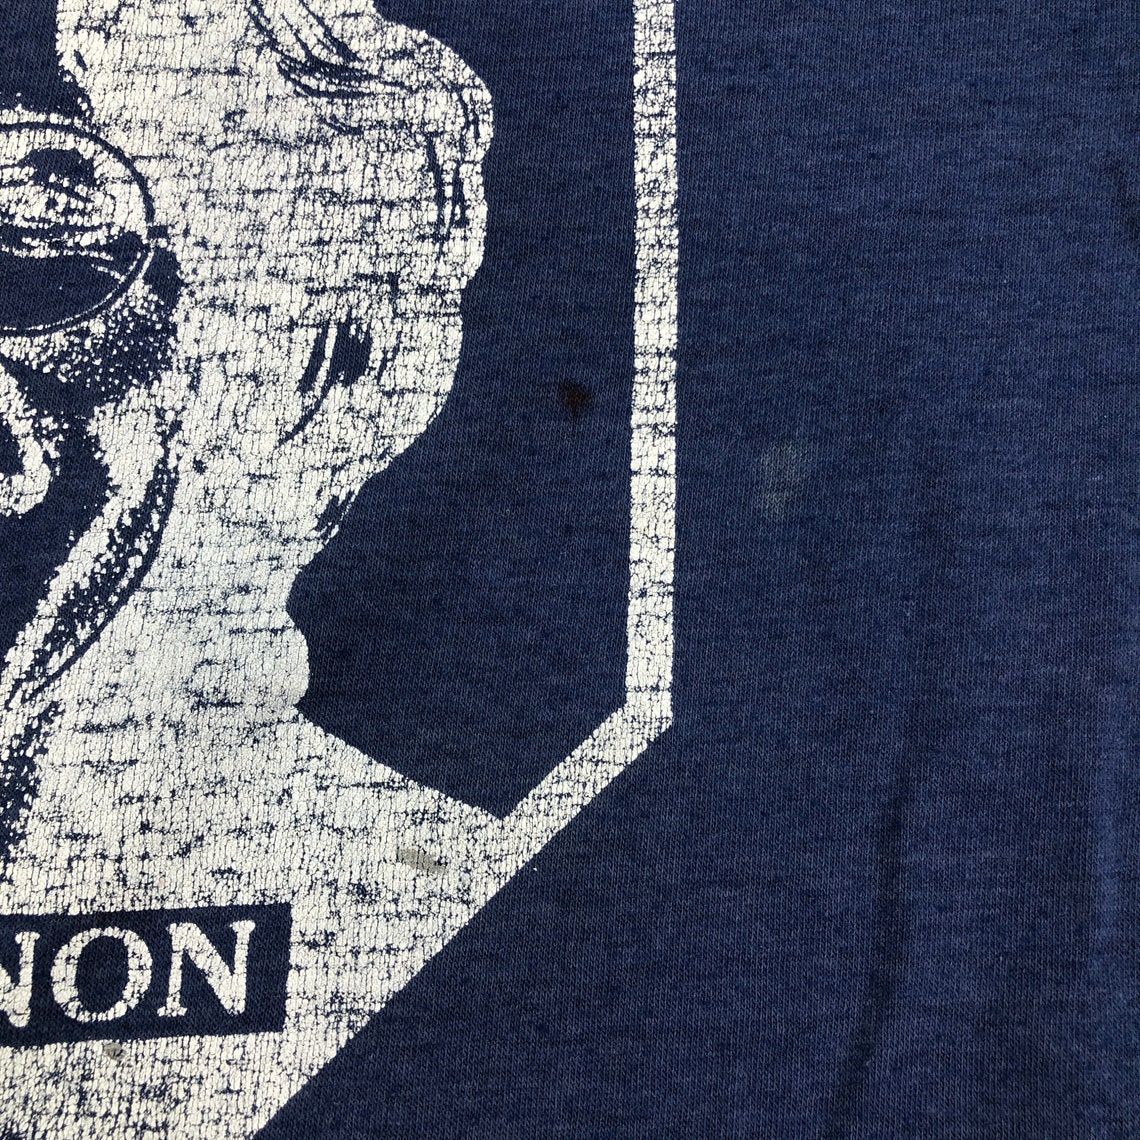 Vintage John Lennon We Miss You T-shirt - Etsy